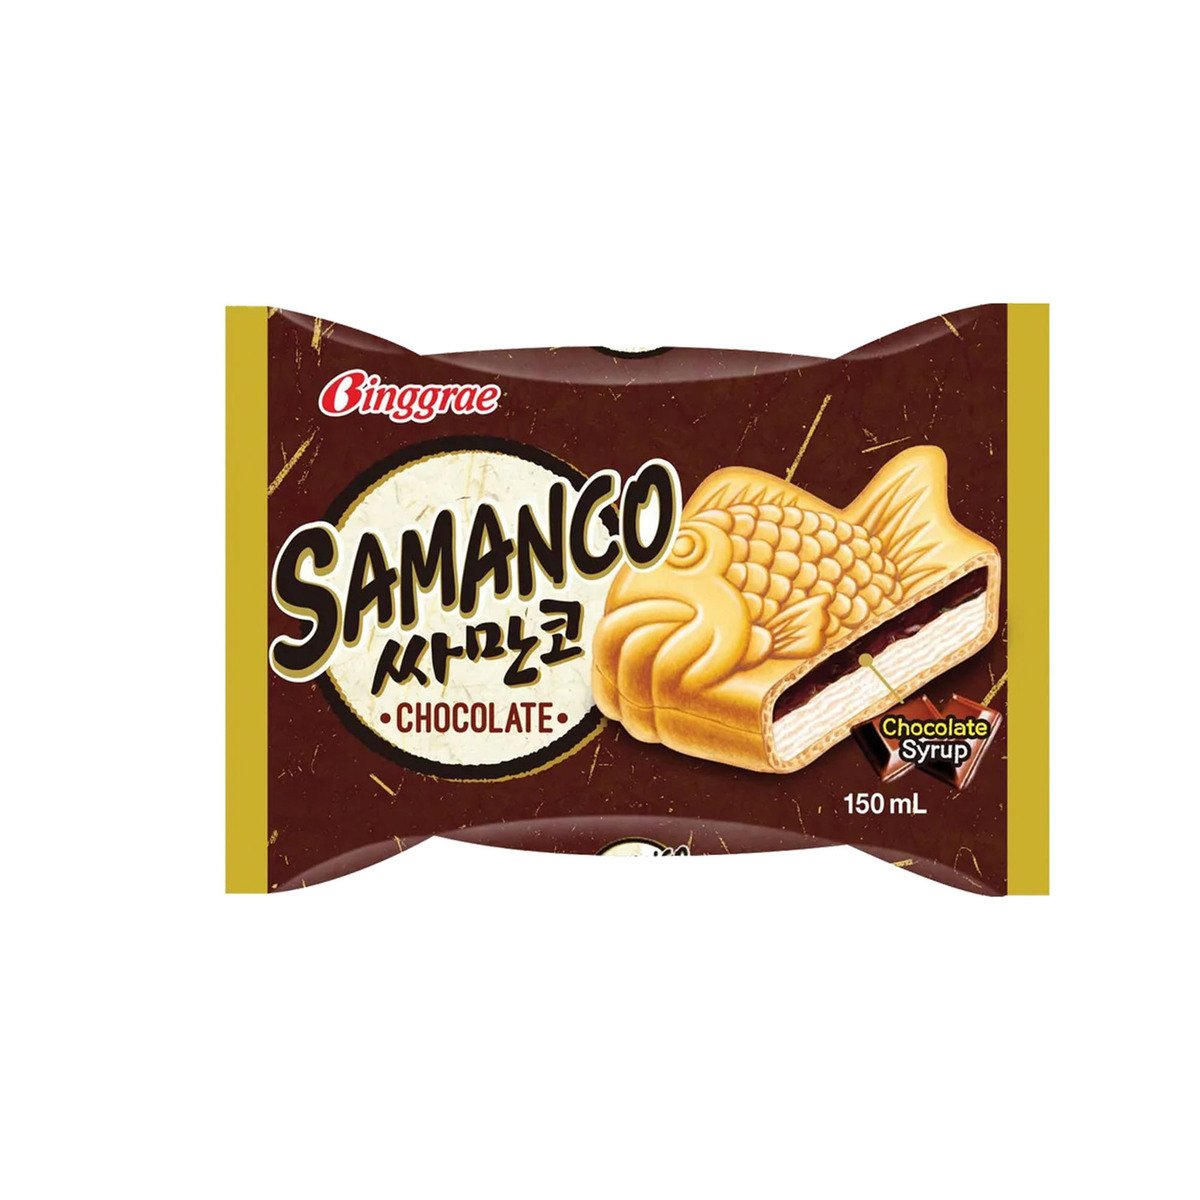 Binggrae Samanco Chocolate Ice Cream Sandwich 150 ml